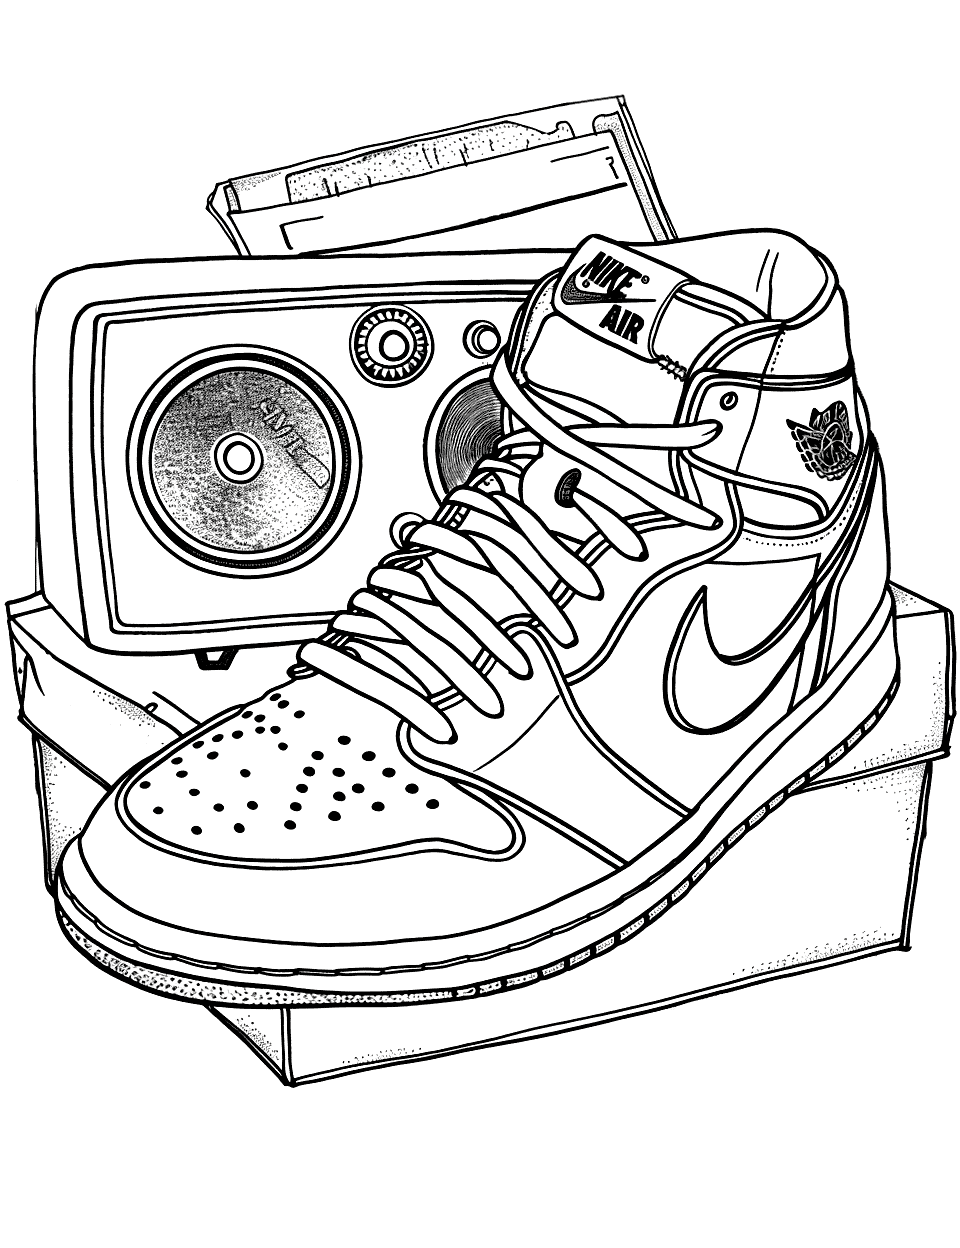 Air Jordan Retro Moment Shoe Coloring Page - Classic Air Jordan shoe with a vintage radio.